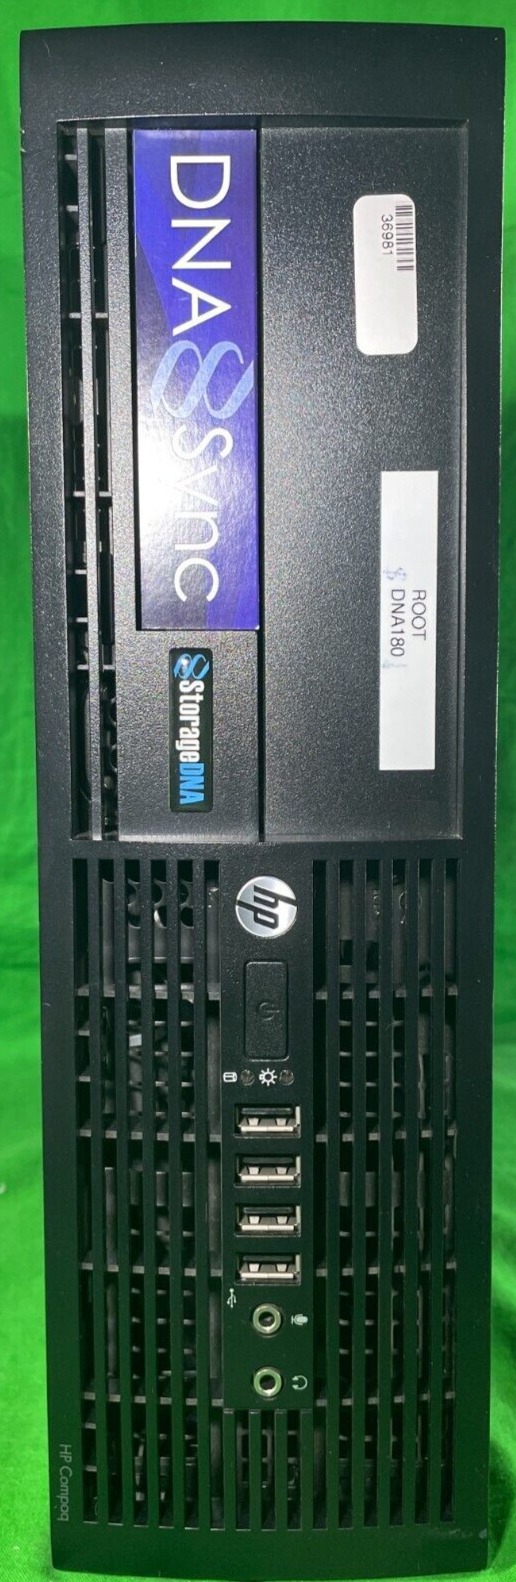 HP Compaq 4000 SFF DNA Sync  StorageDNA  3.06GHz 8GB RAM 1TB HD Win 10 Pro